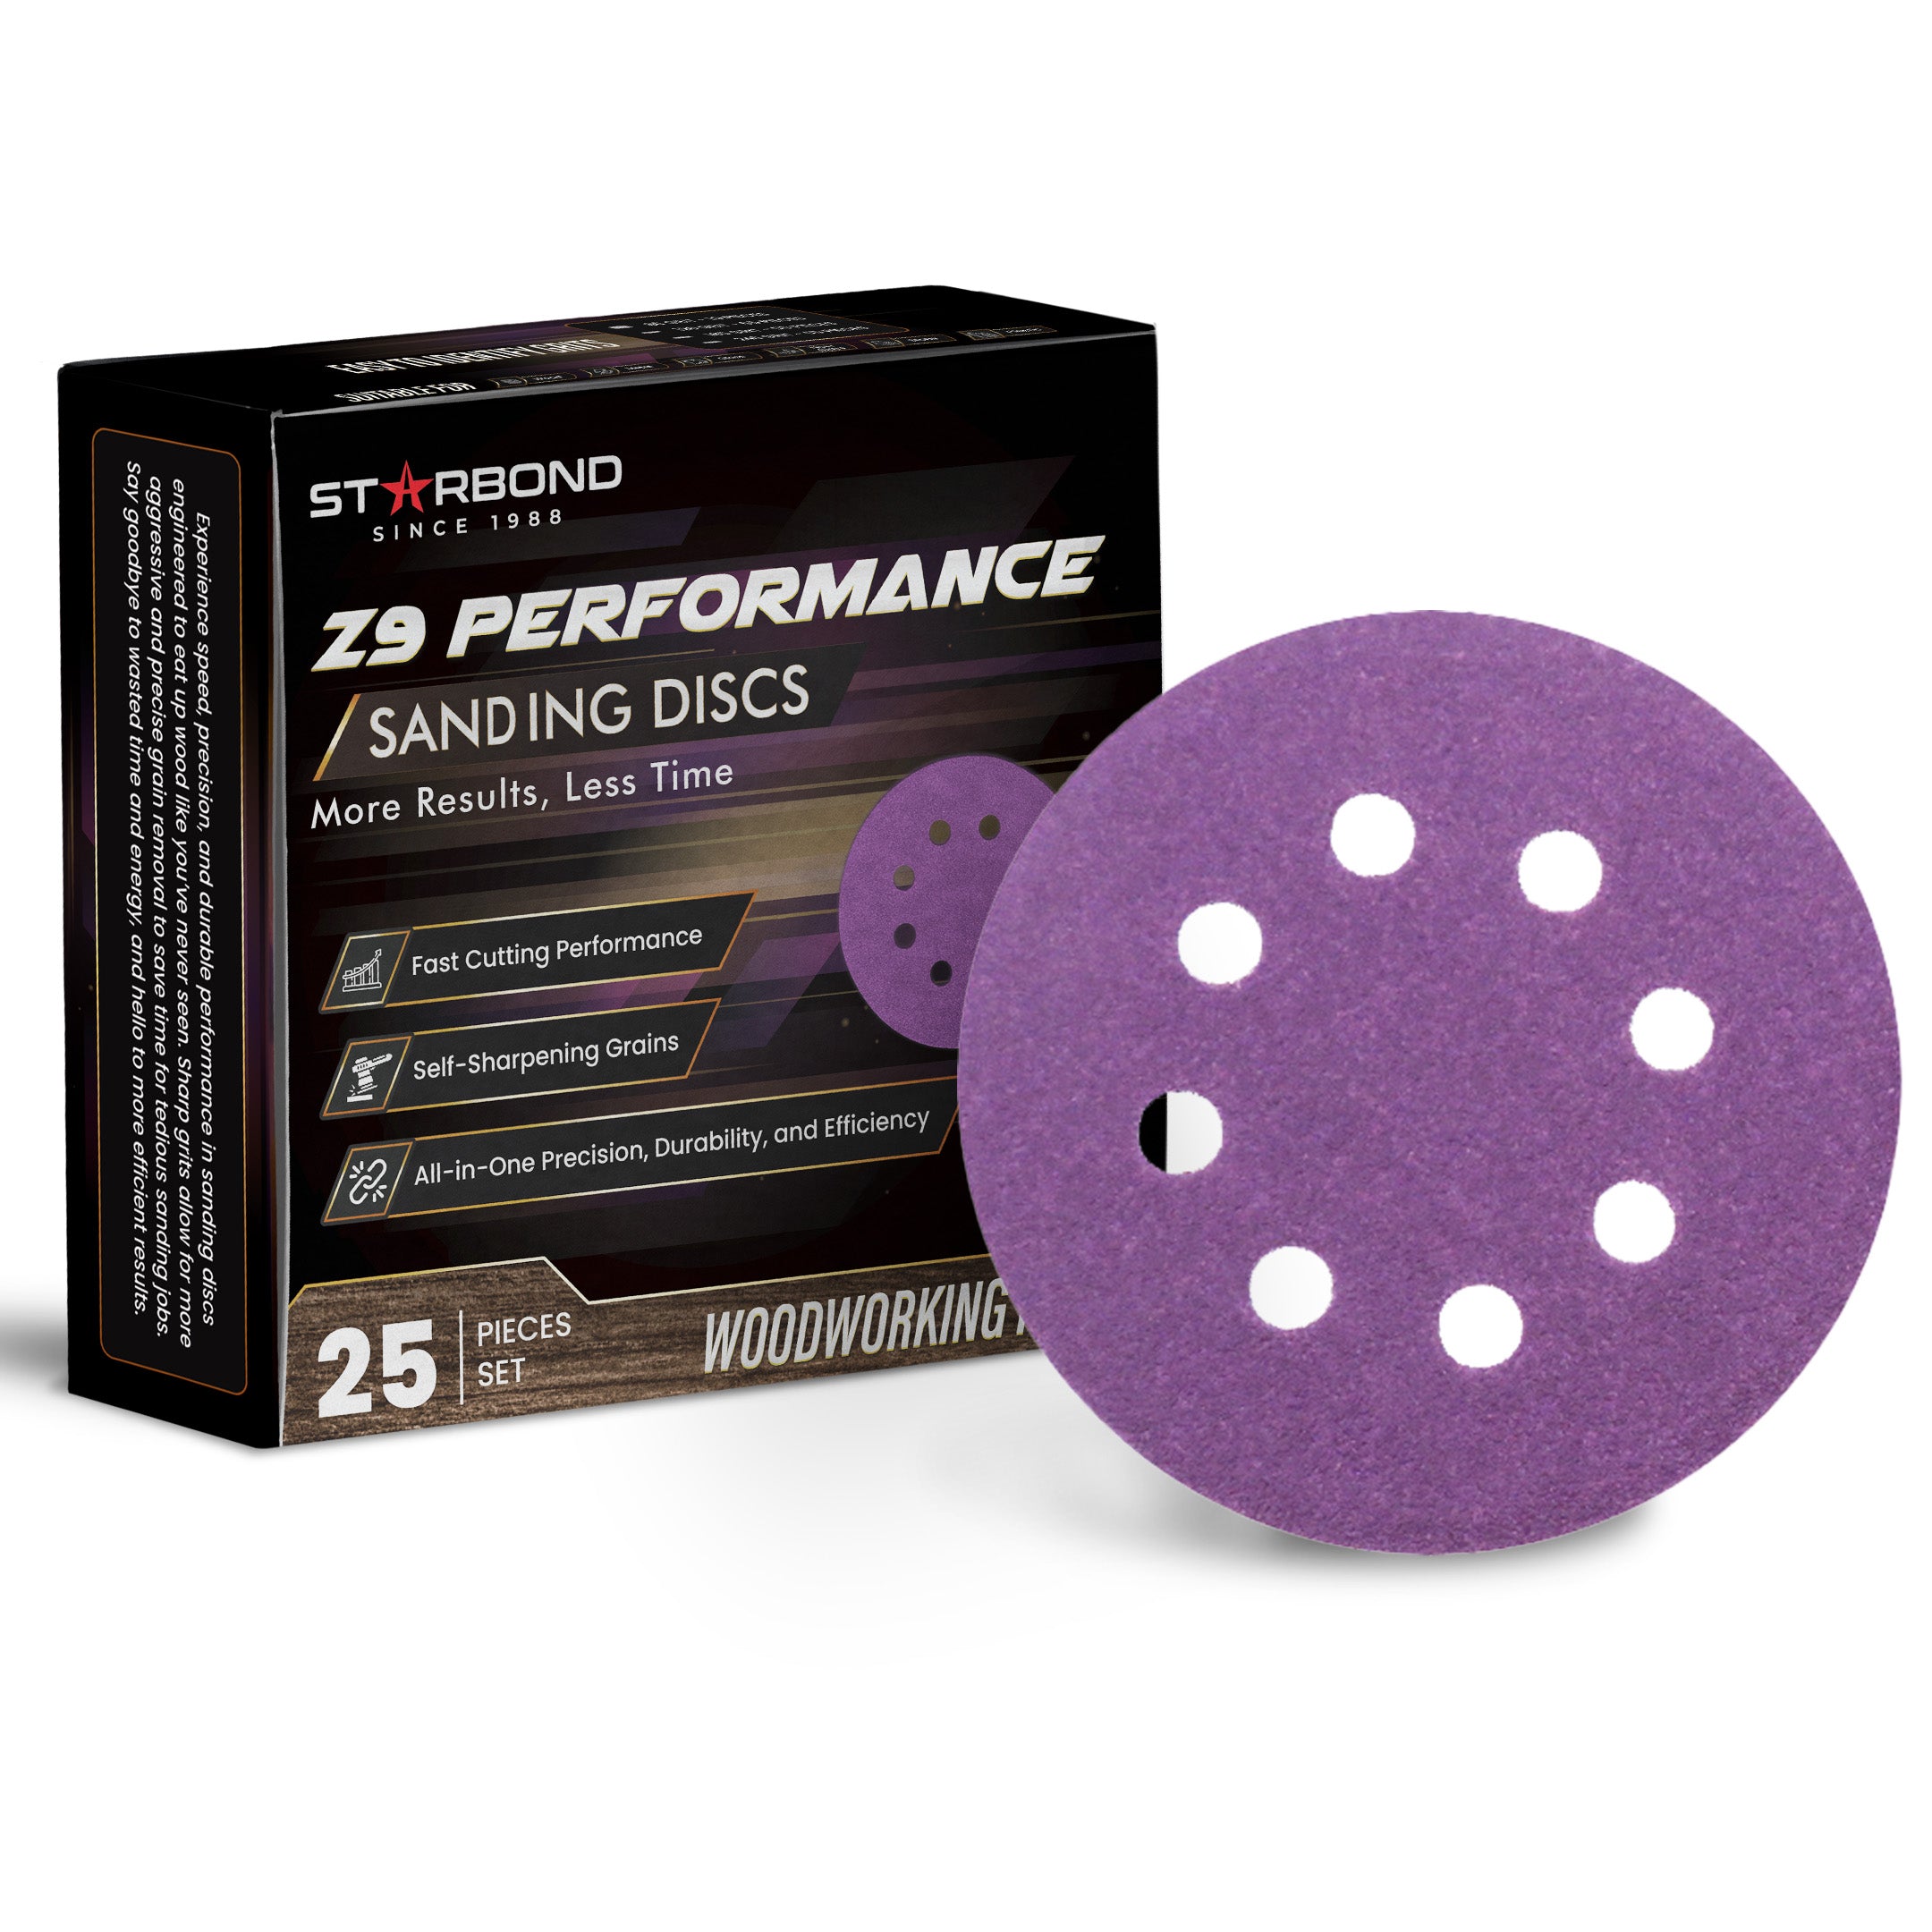 Speed Series | Z9 Performance Sanding Discs | 25-PCS Pack